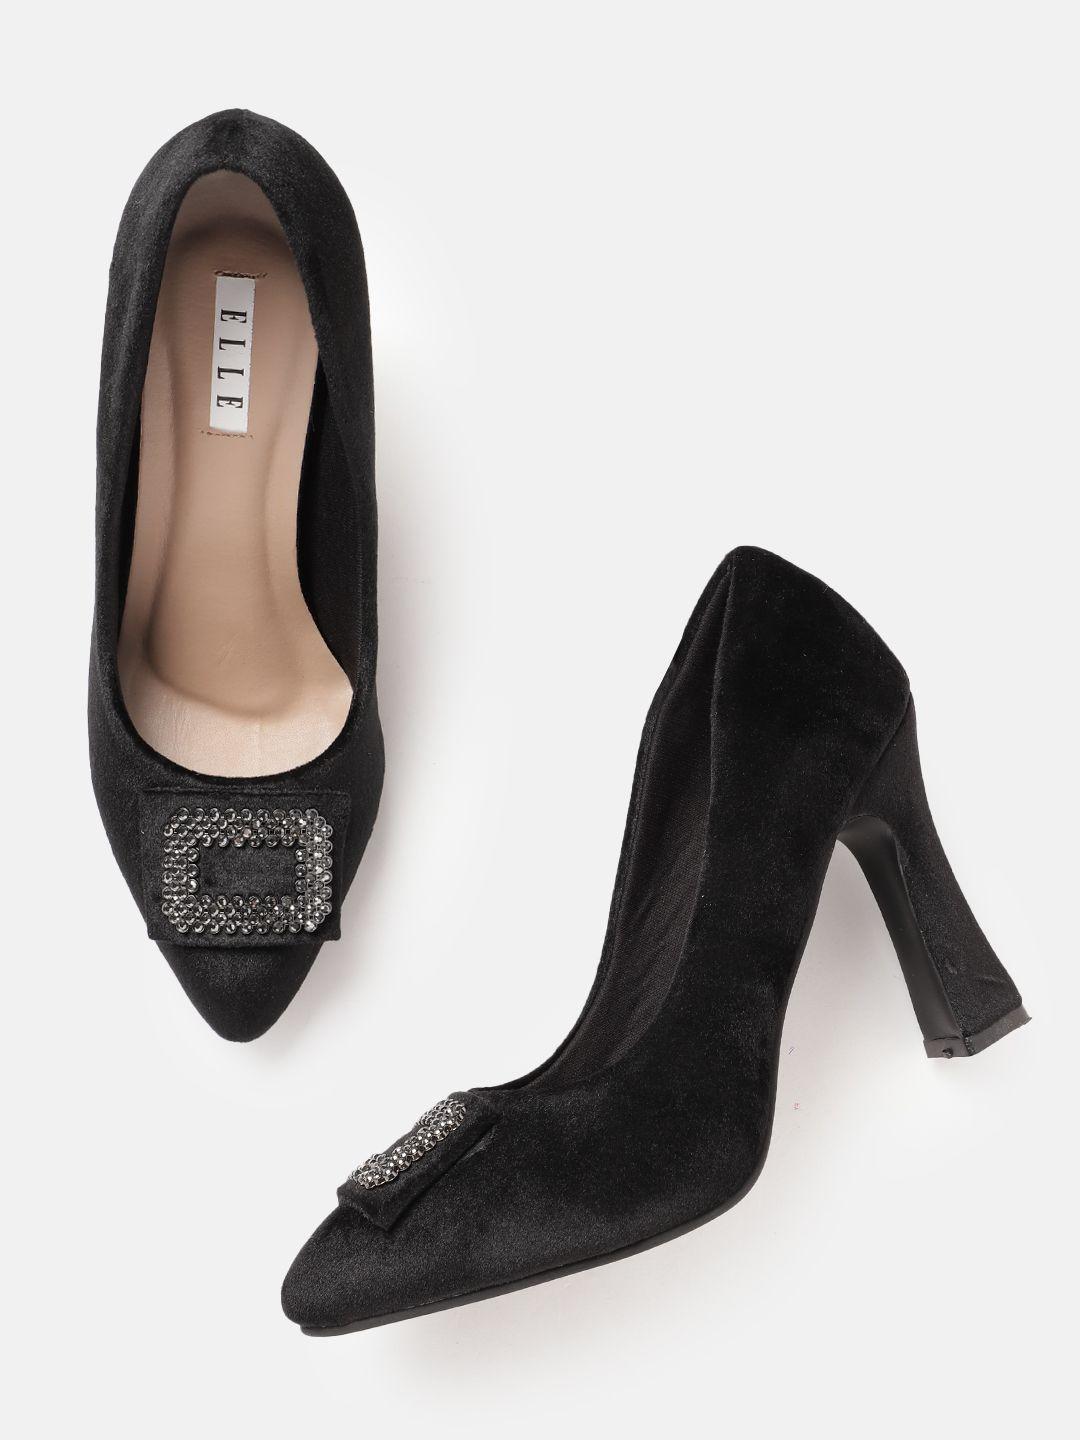 elle party block heel pumps with embellished detail